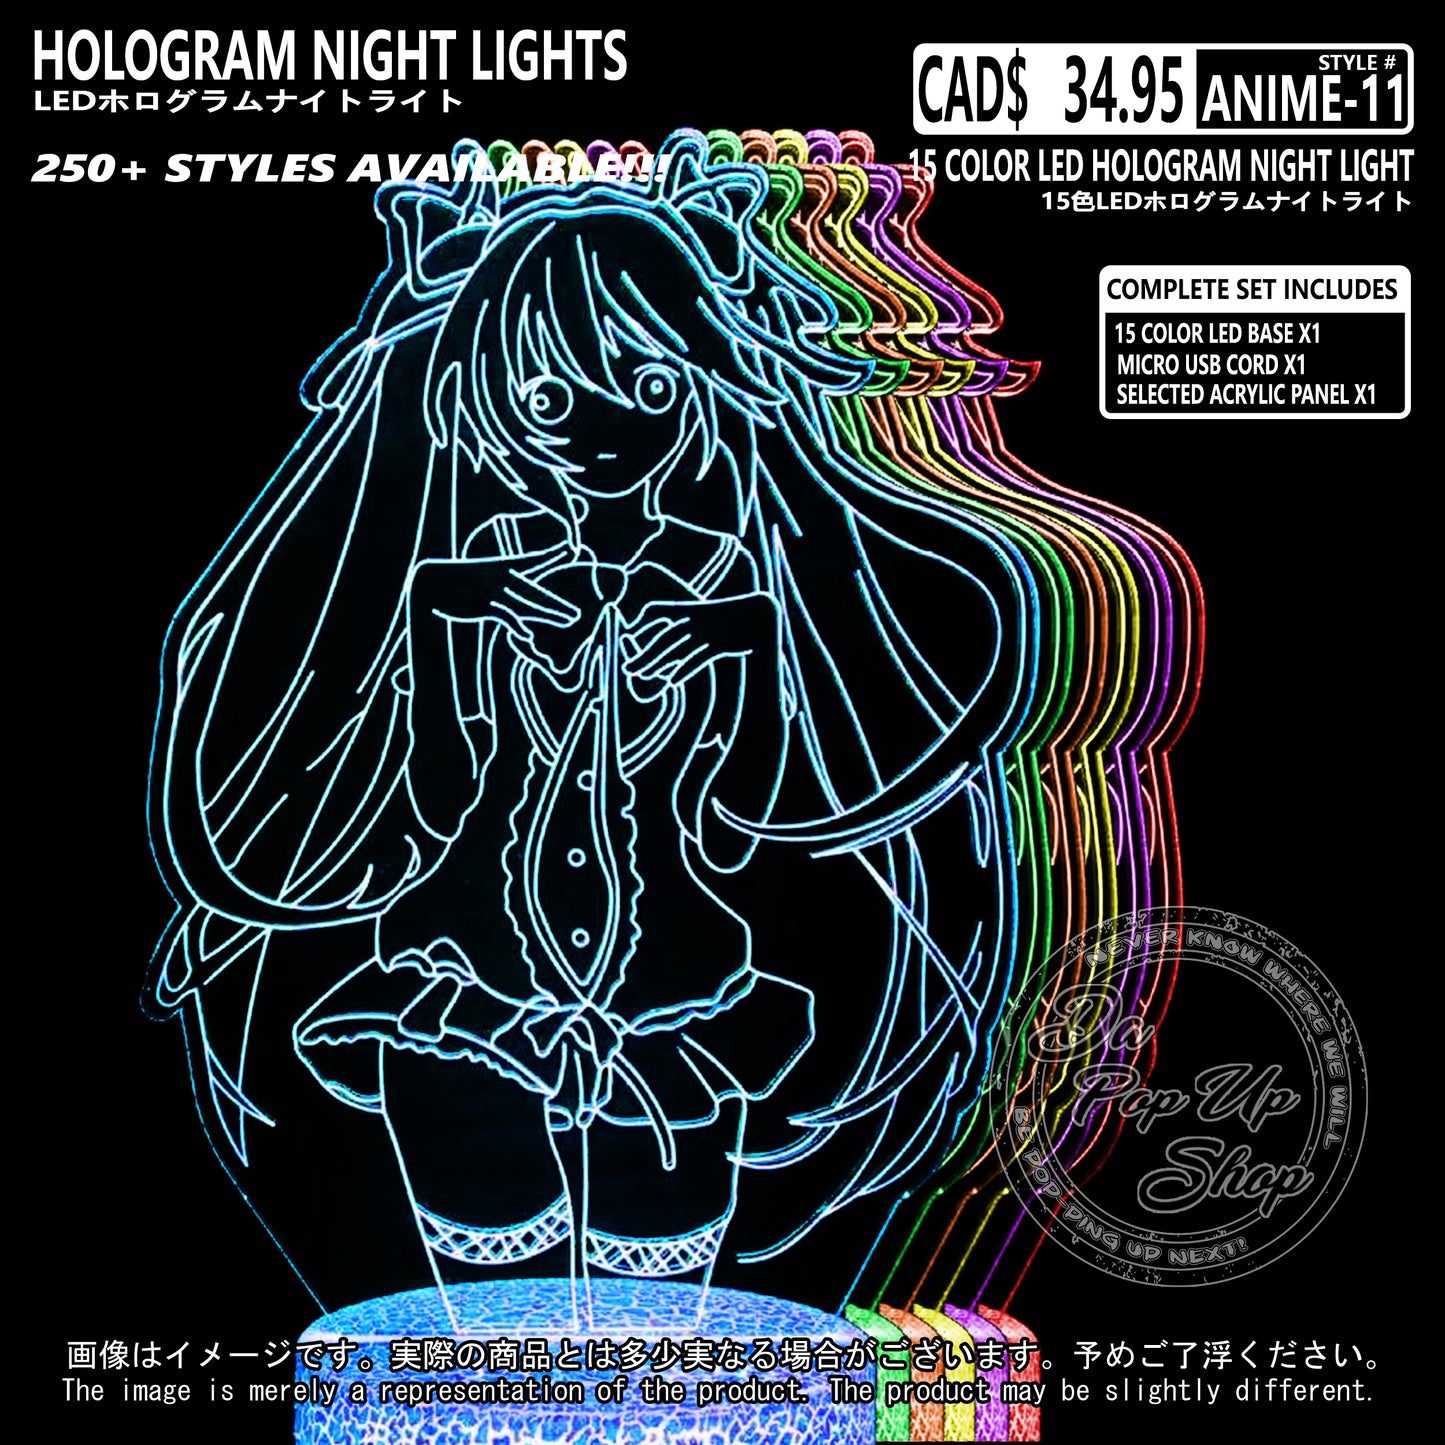 (ANIME-11) Hatsune Miku Hologram LED Night Light